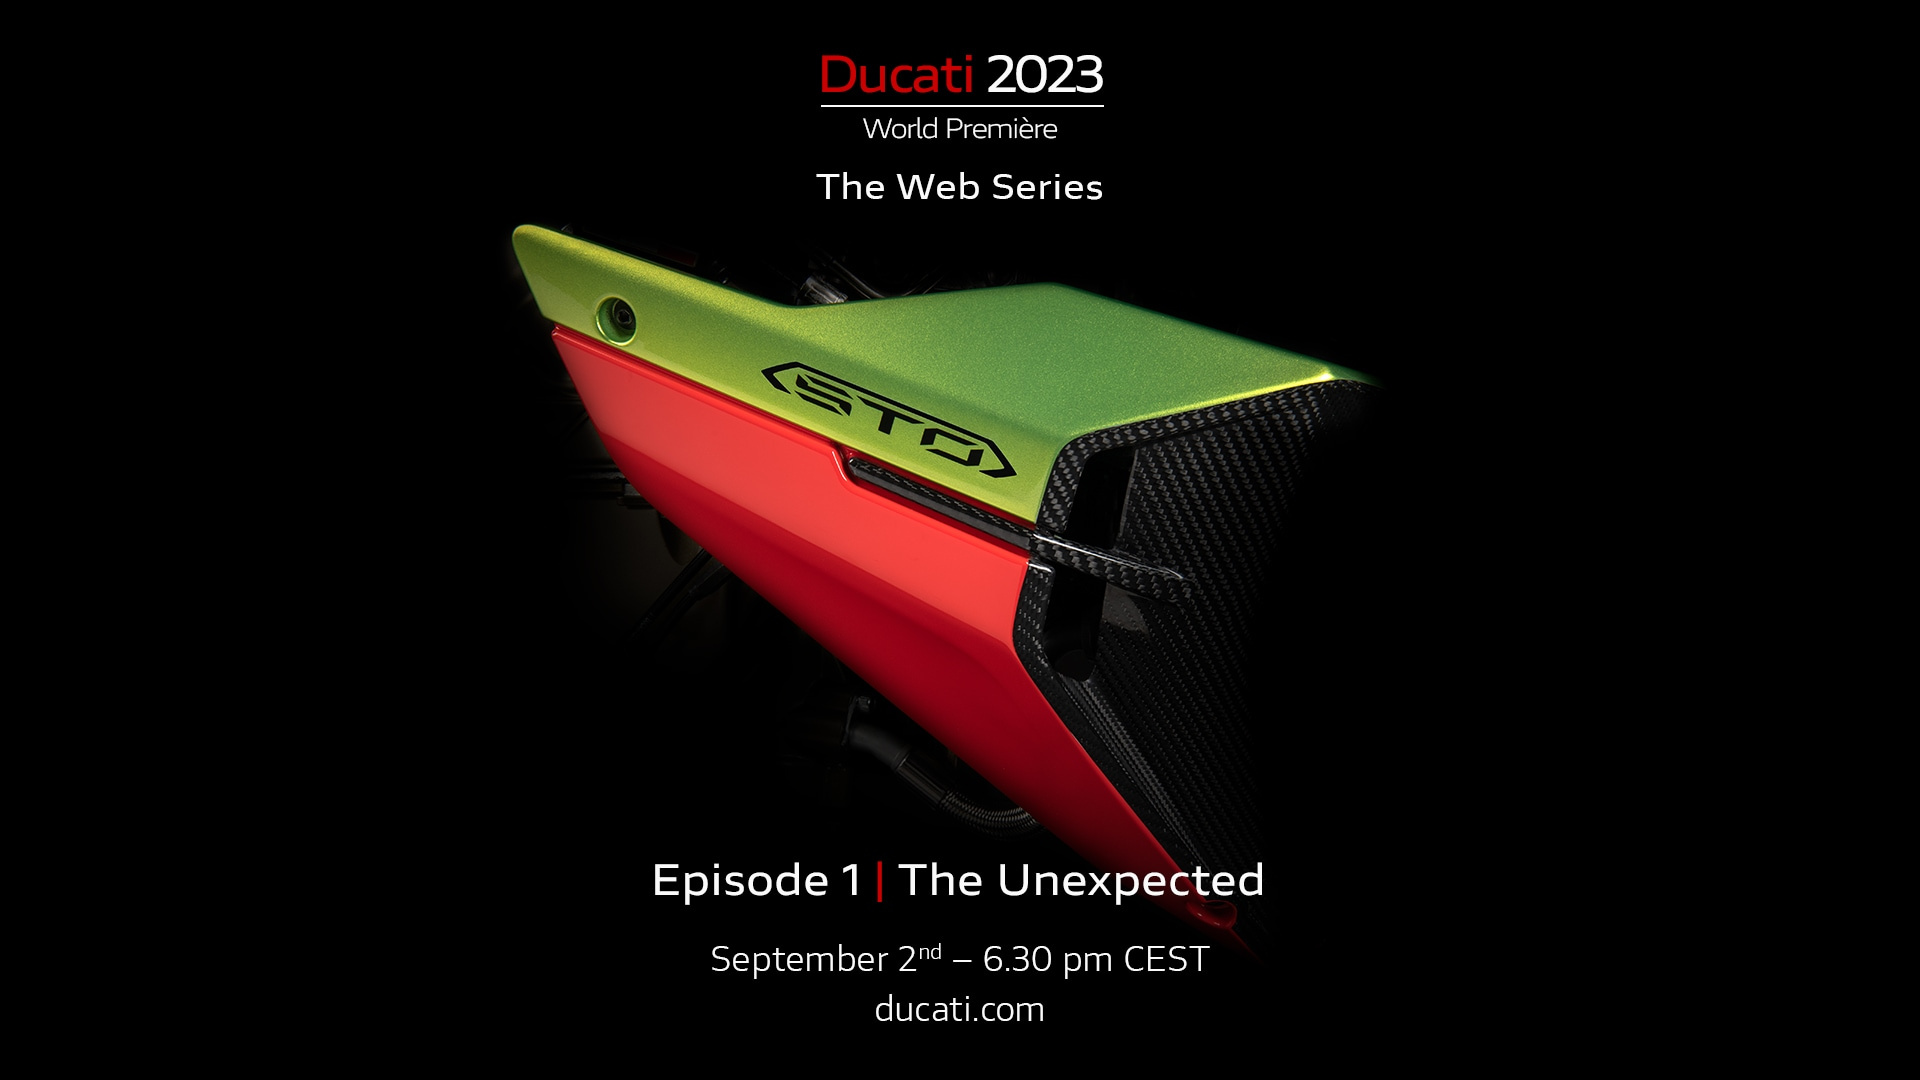 Ducati World Première 2023 Episode 1